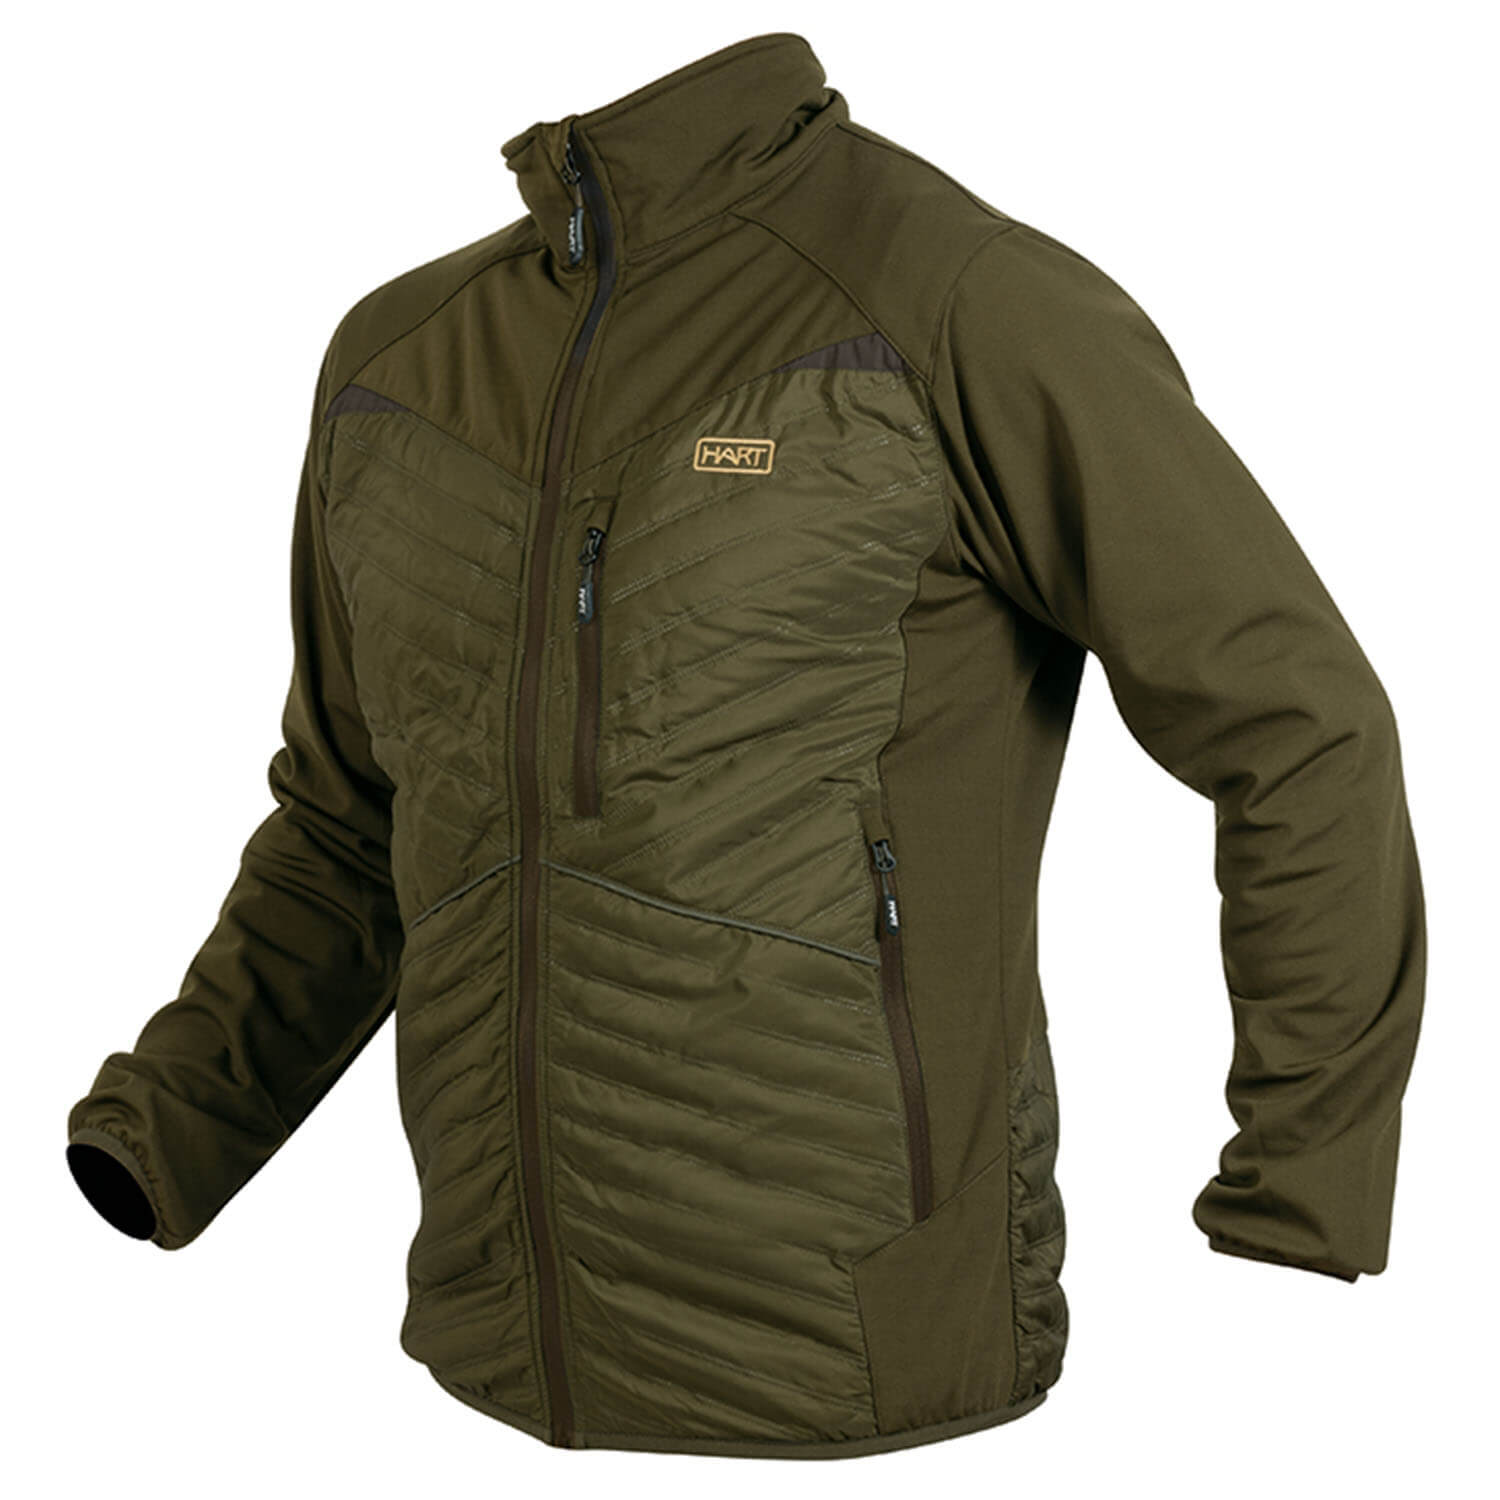 Hart Jacket Verdon - Hunting Clothing